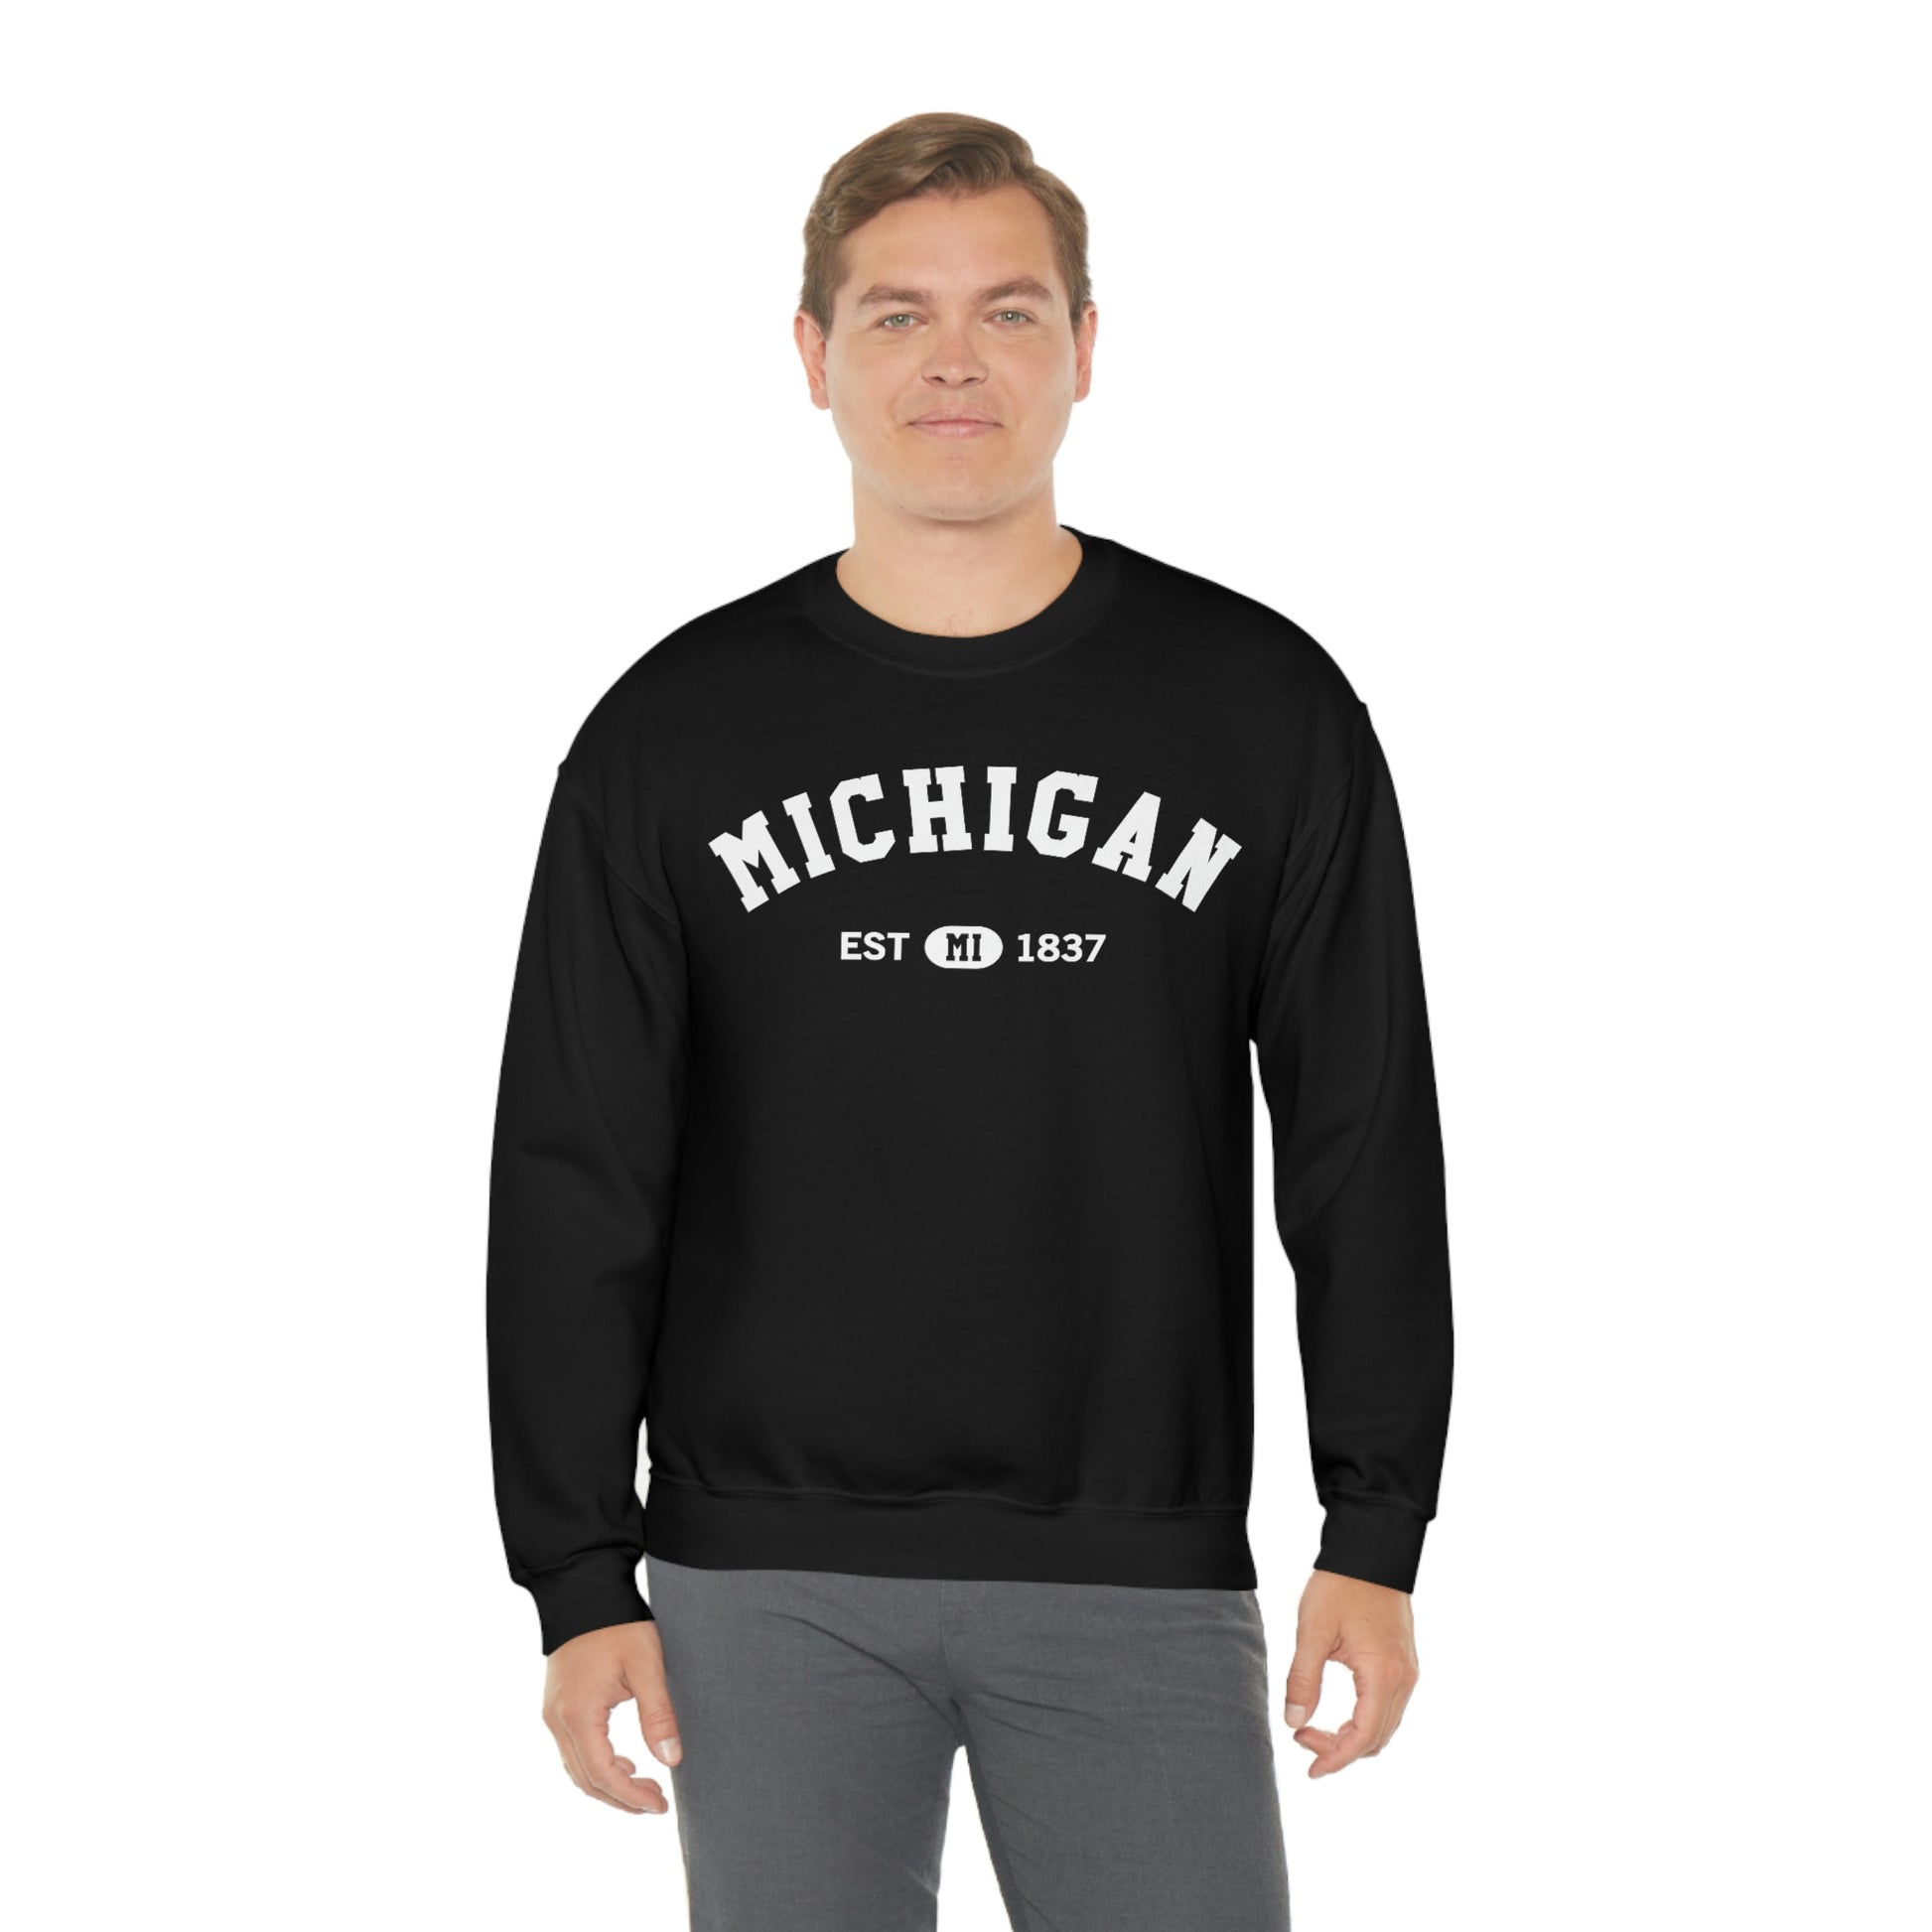 Michigan Sweatshirt, State MI Vintage Graphic Crewneck Fleece Cotton Sweater College Jumper Pullover Men Women Aesthetic Top Starcove Fashion